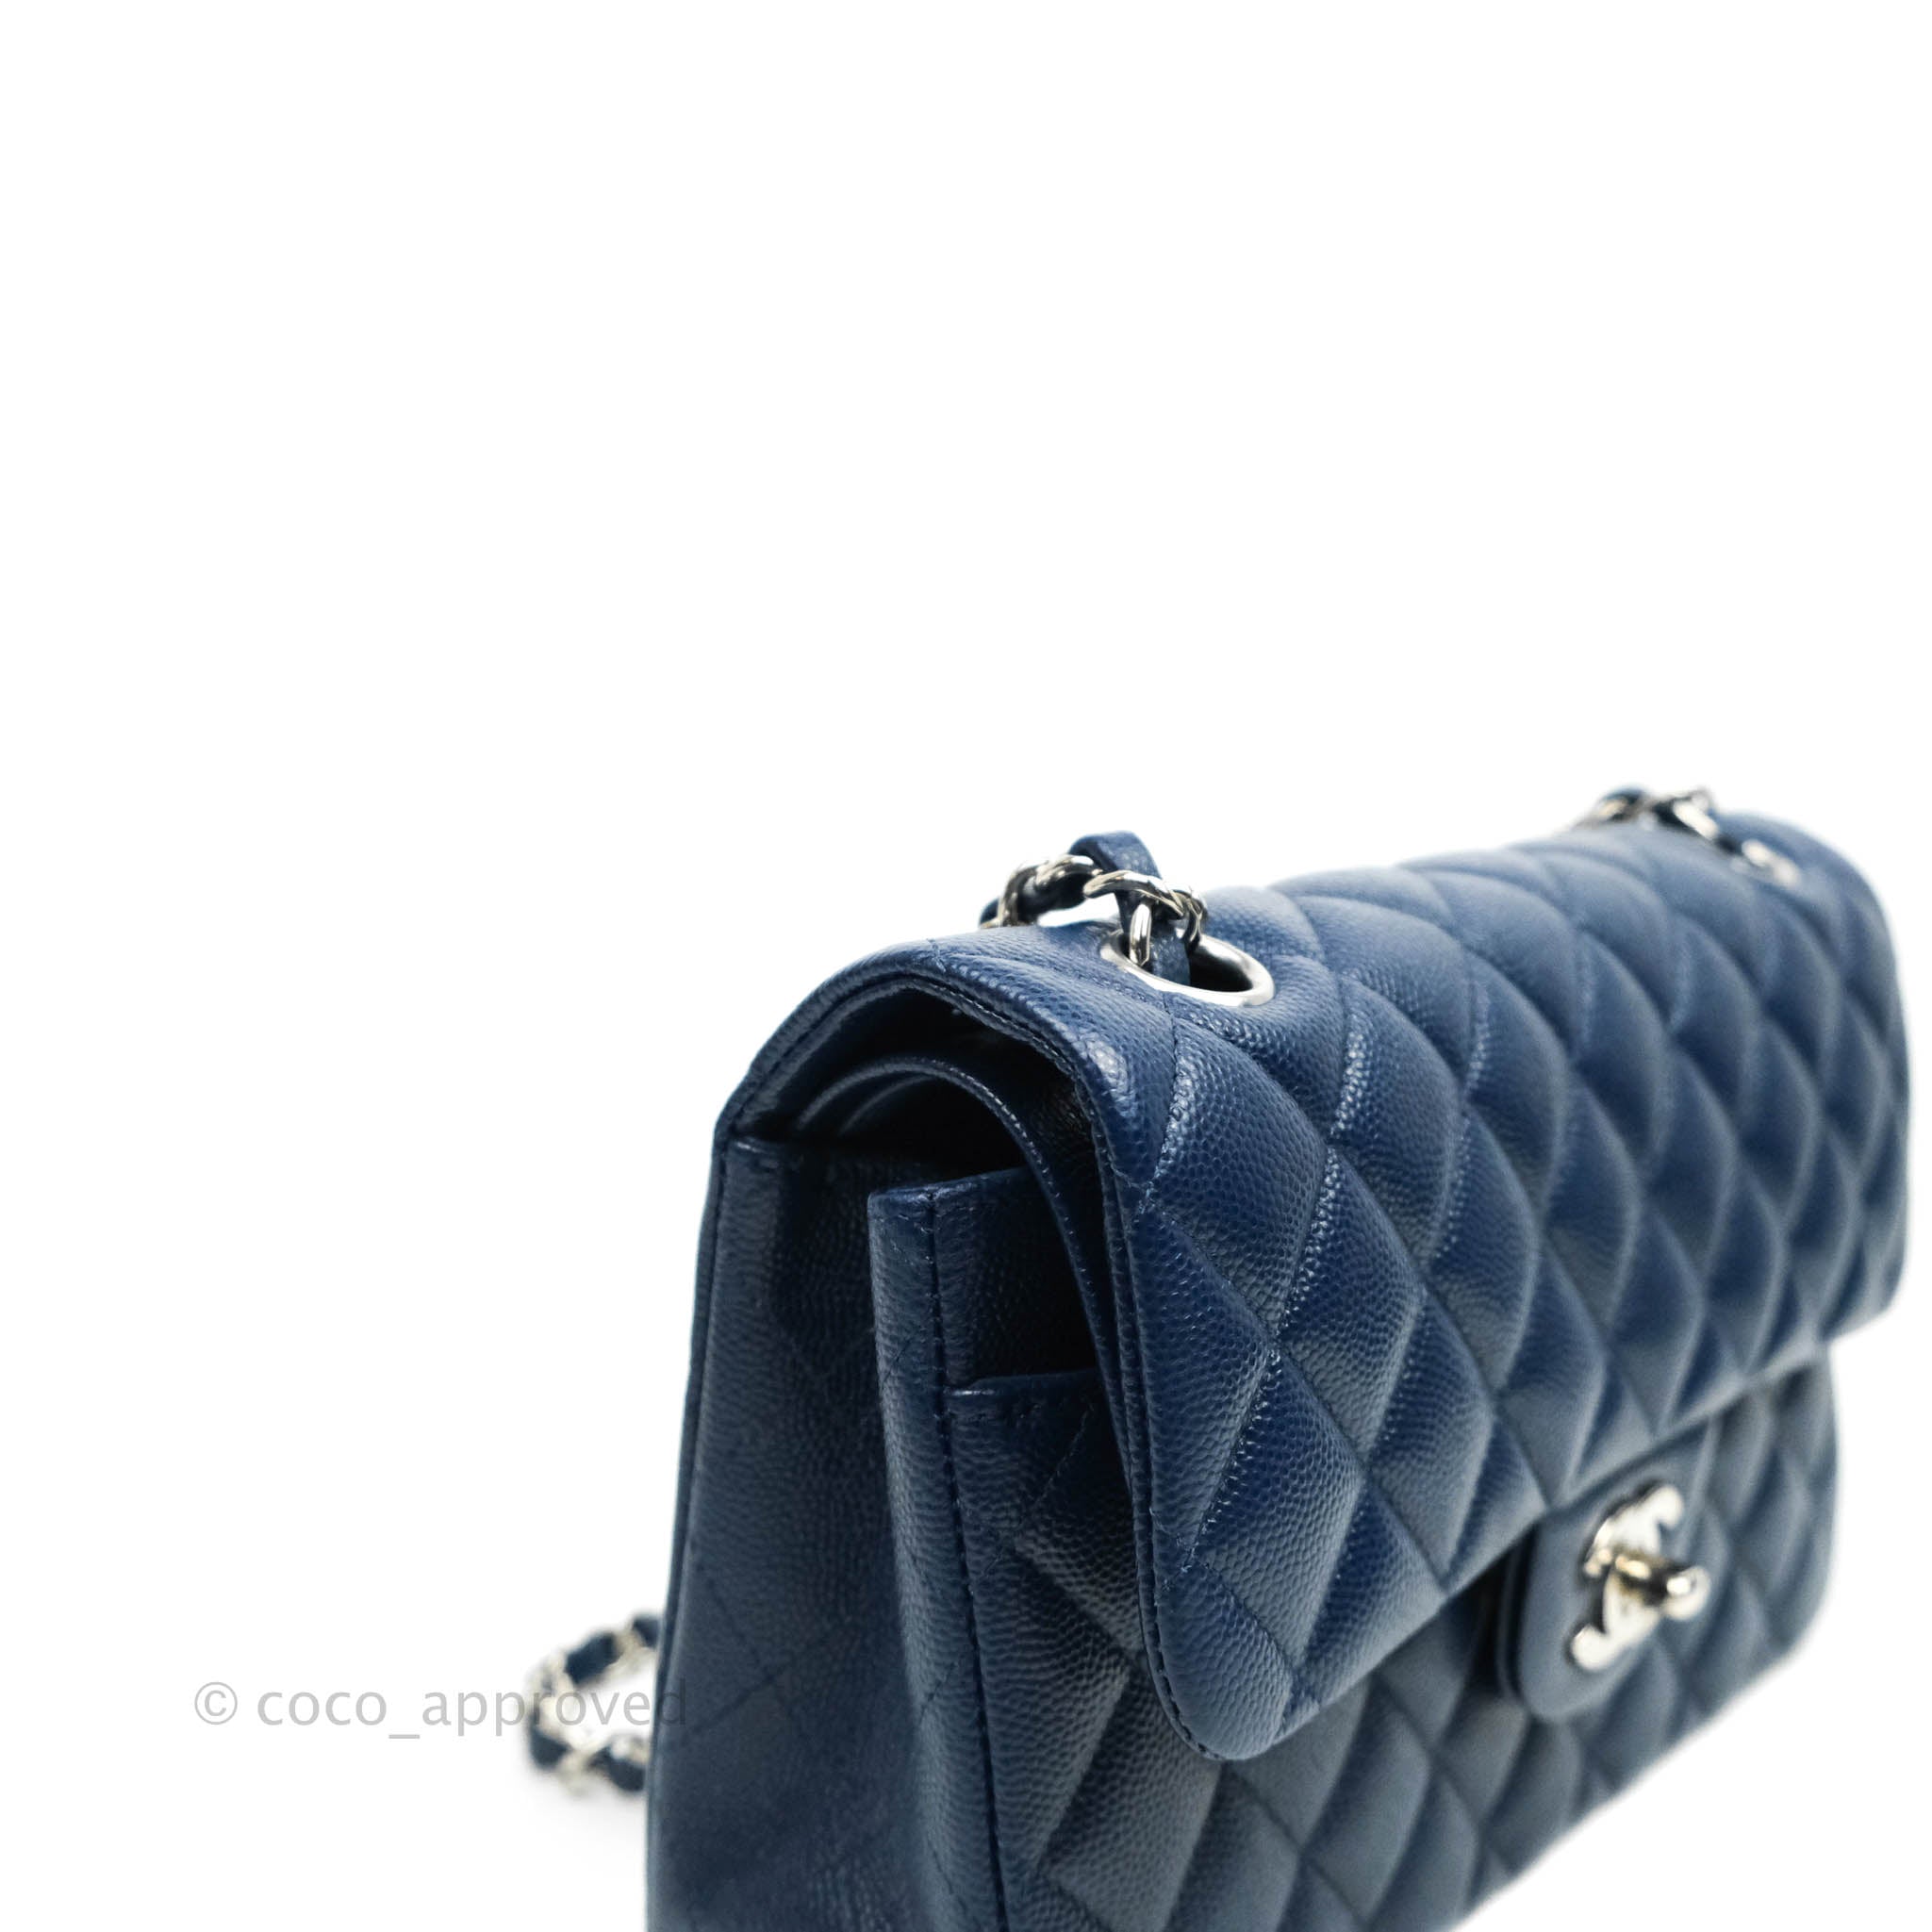 classic chanel blue bag